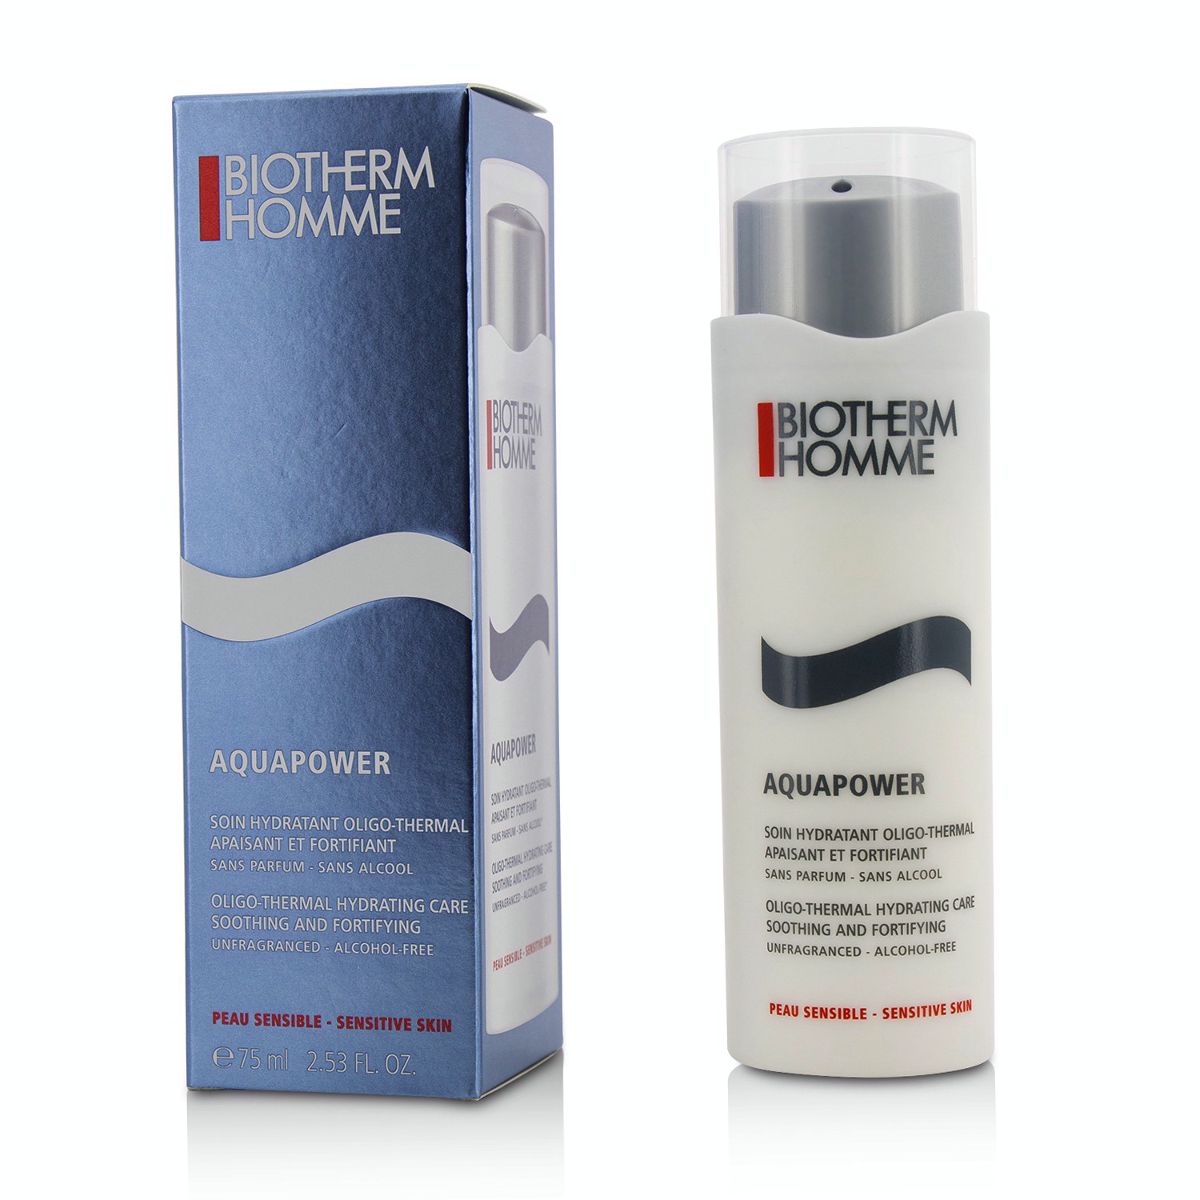 Homme Aquapower - Sensitive Skin Biotherm Image